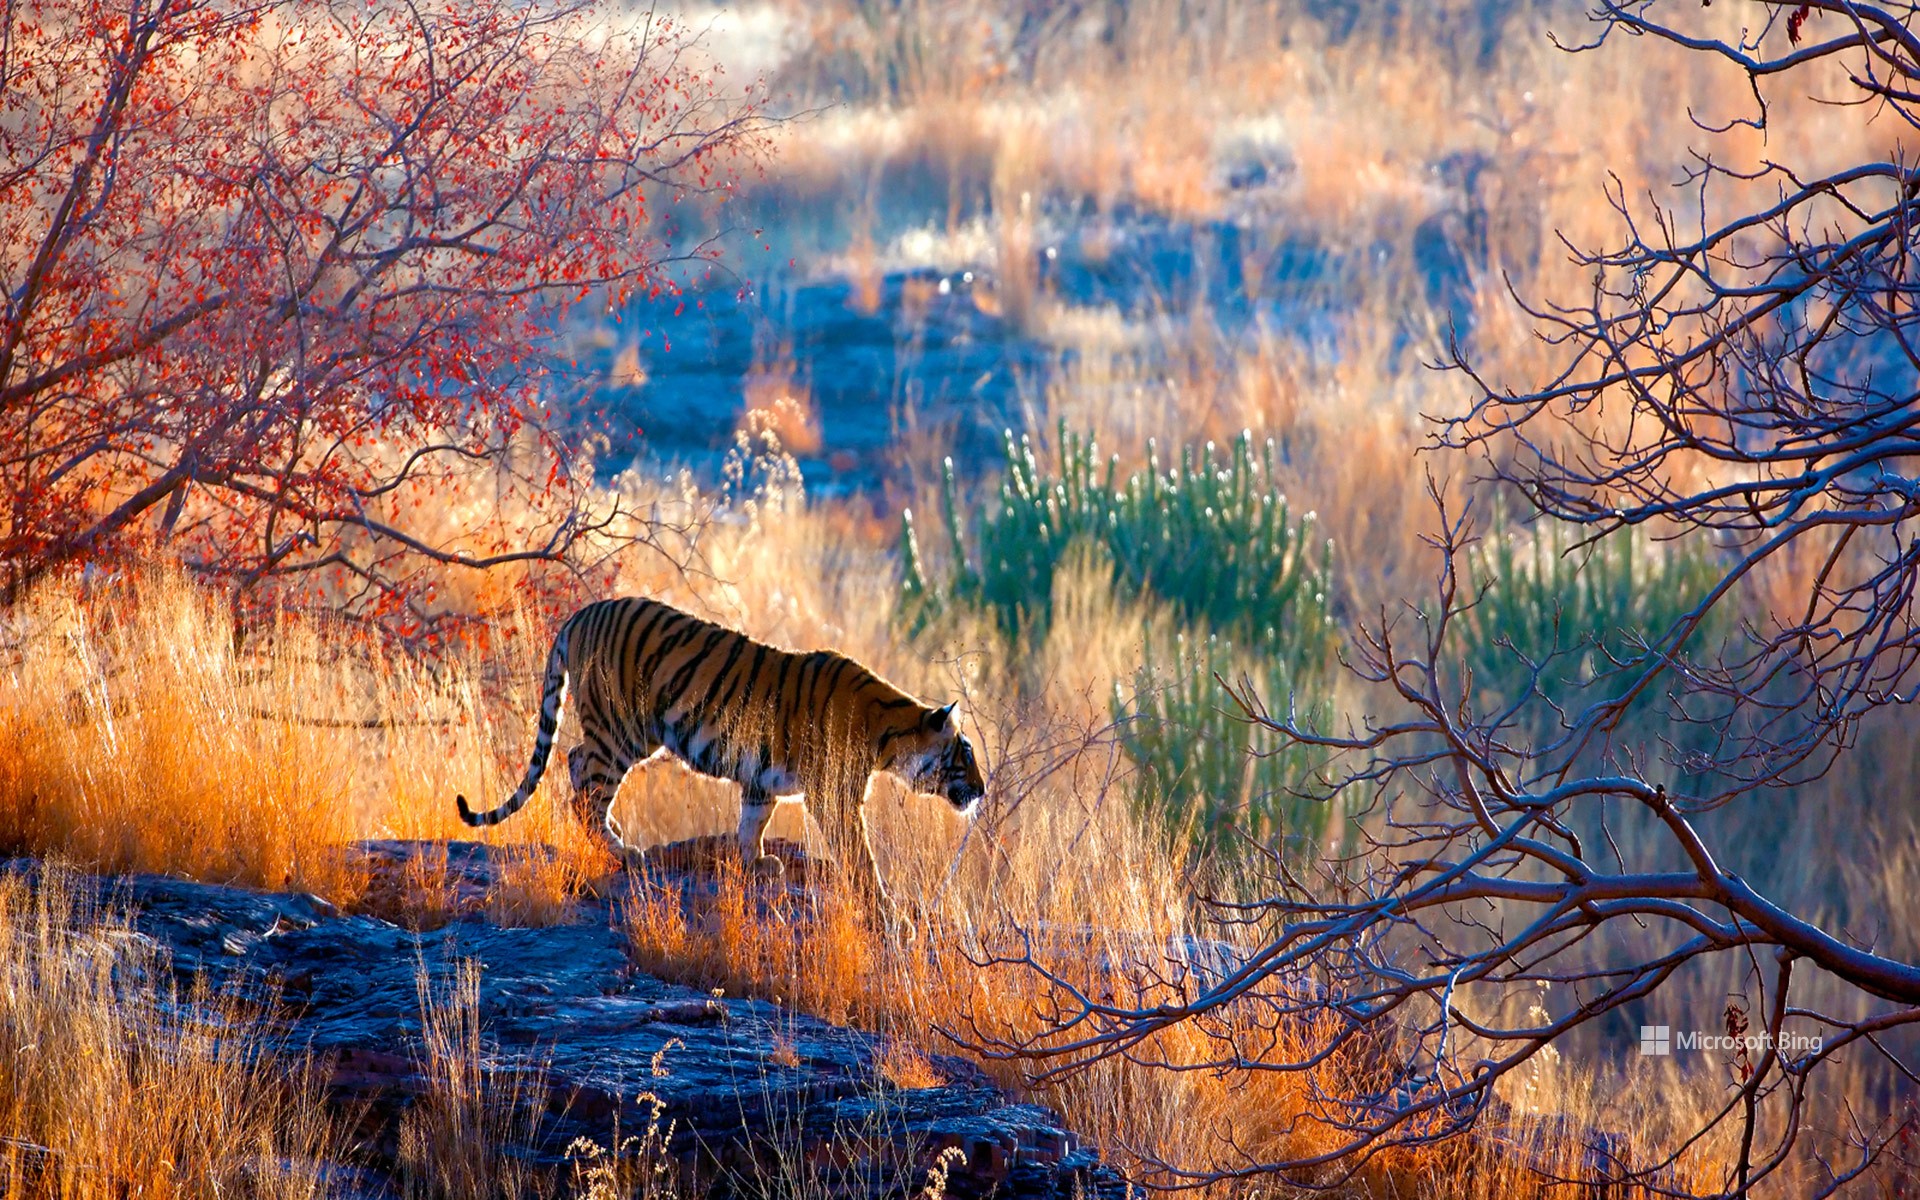 Bengal tiger, Ranthambore National Park, Rajasthan, India